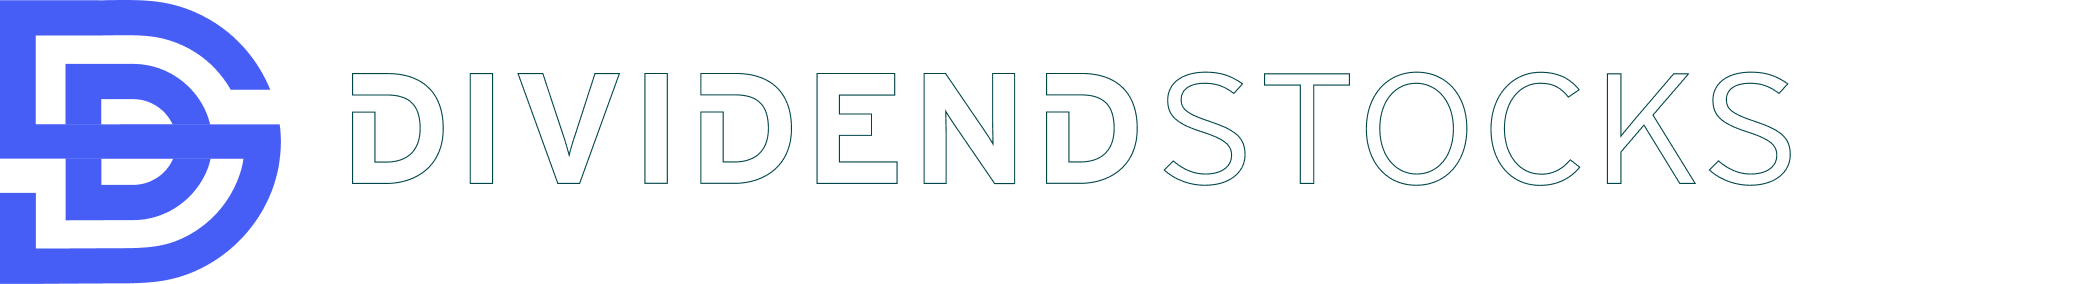 DividendStocks.com Logo